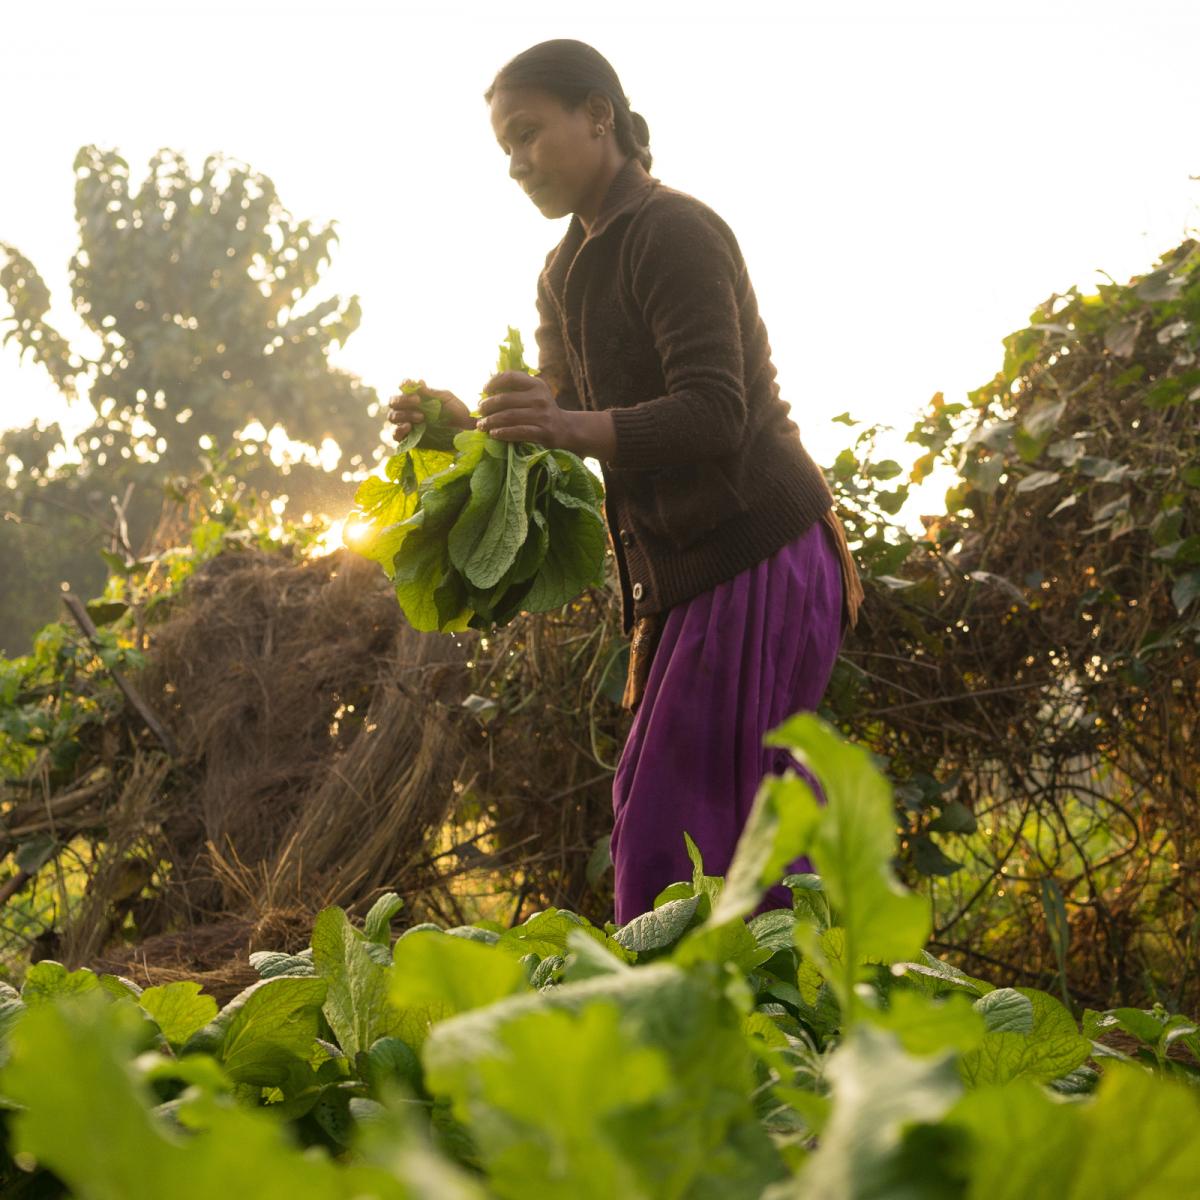 A woman harvesting green vegetation.